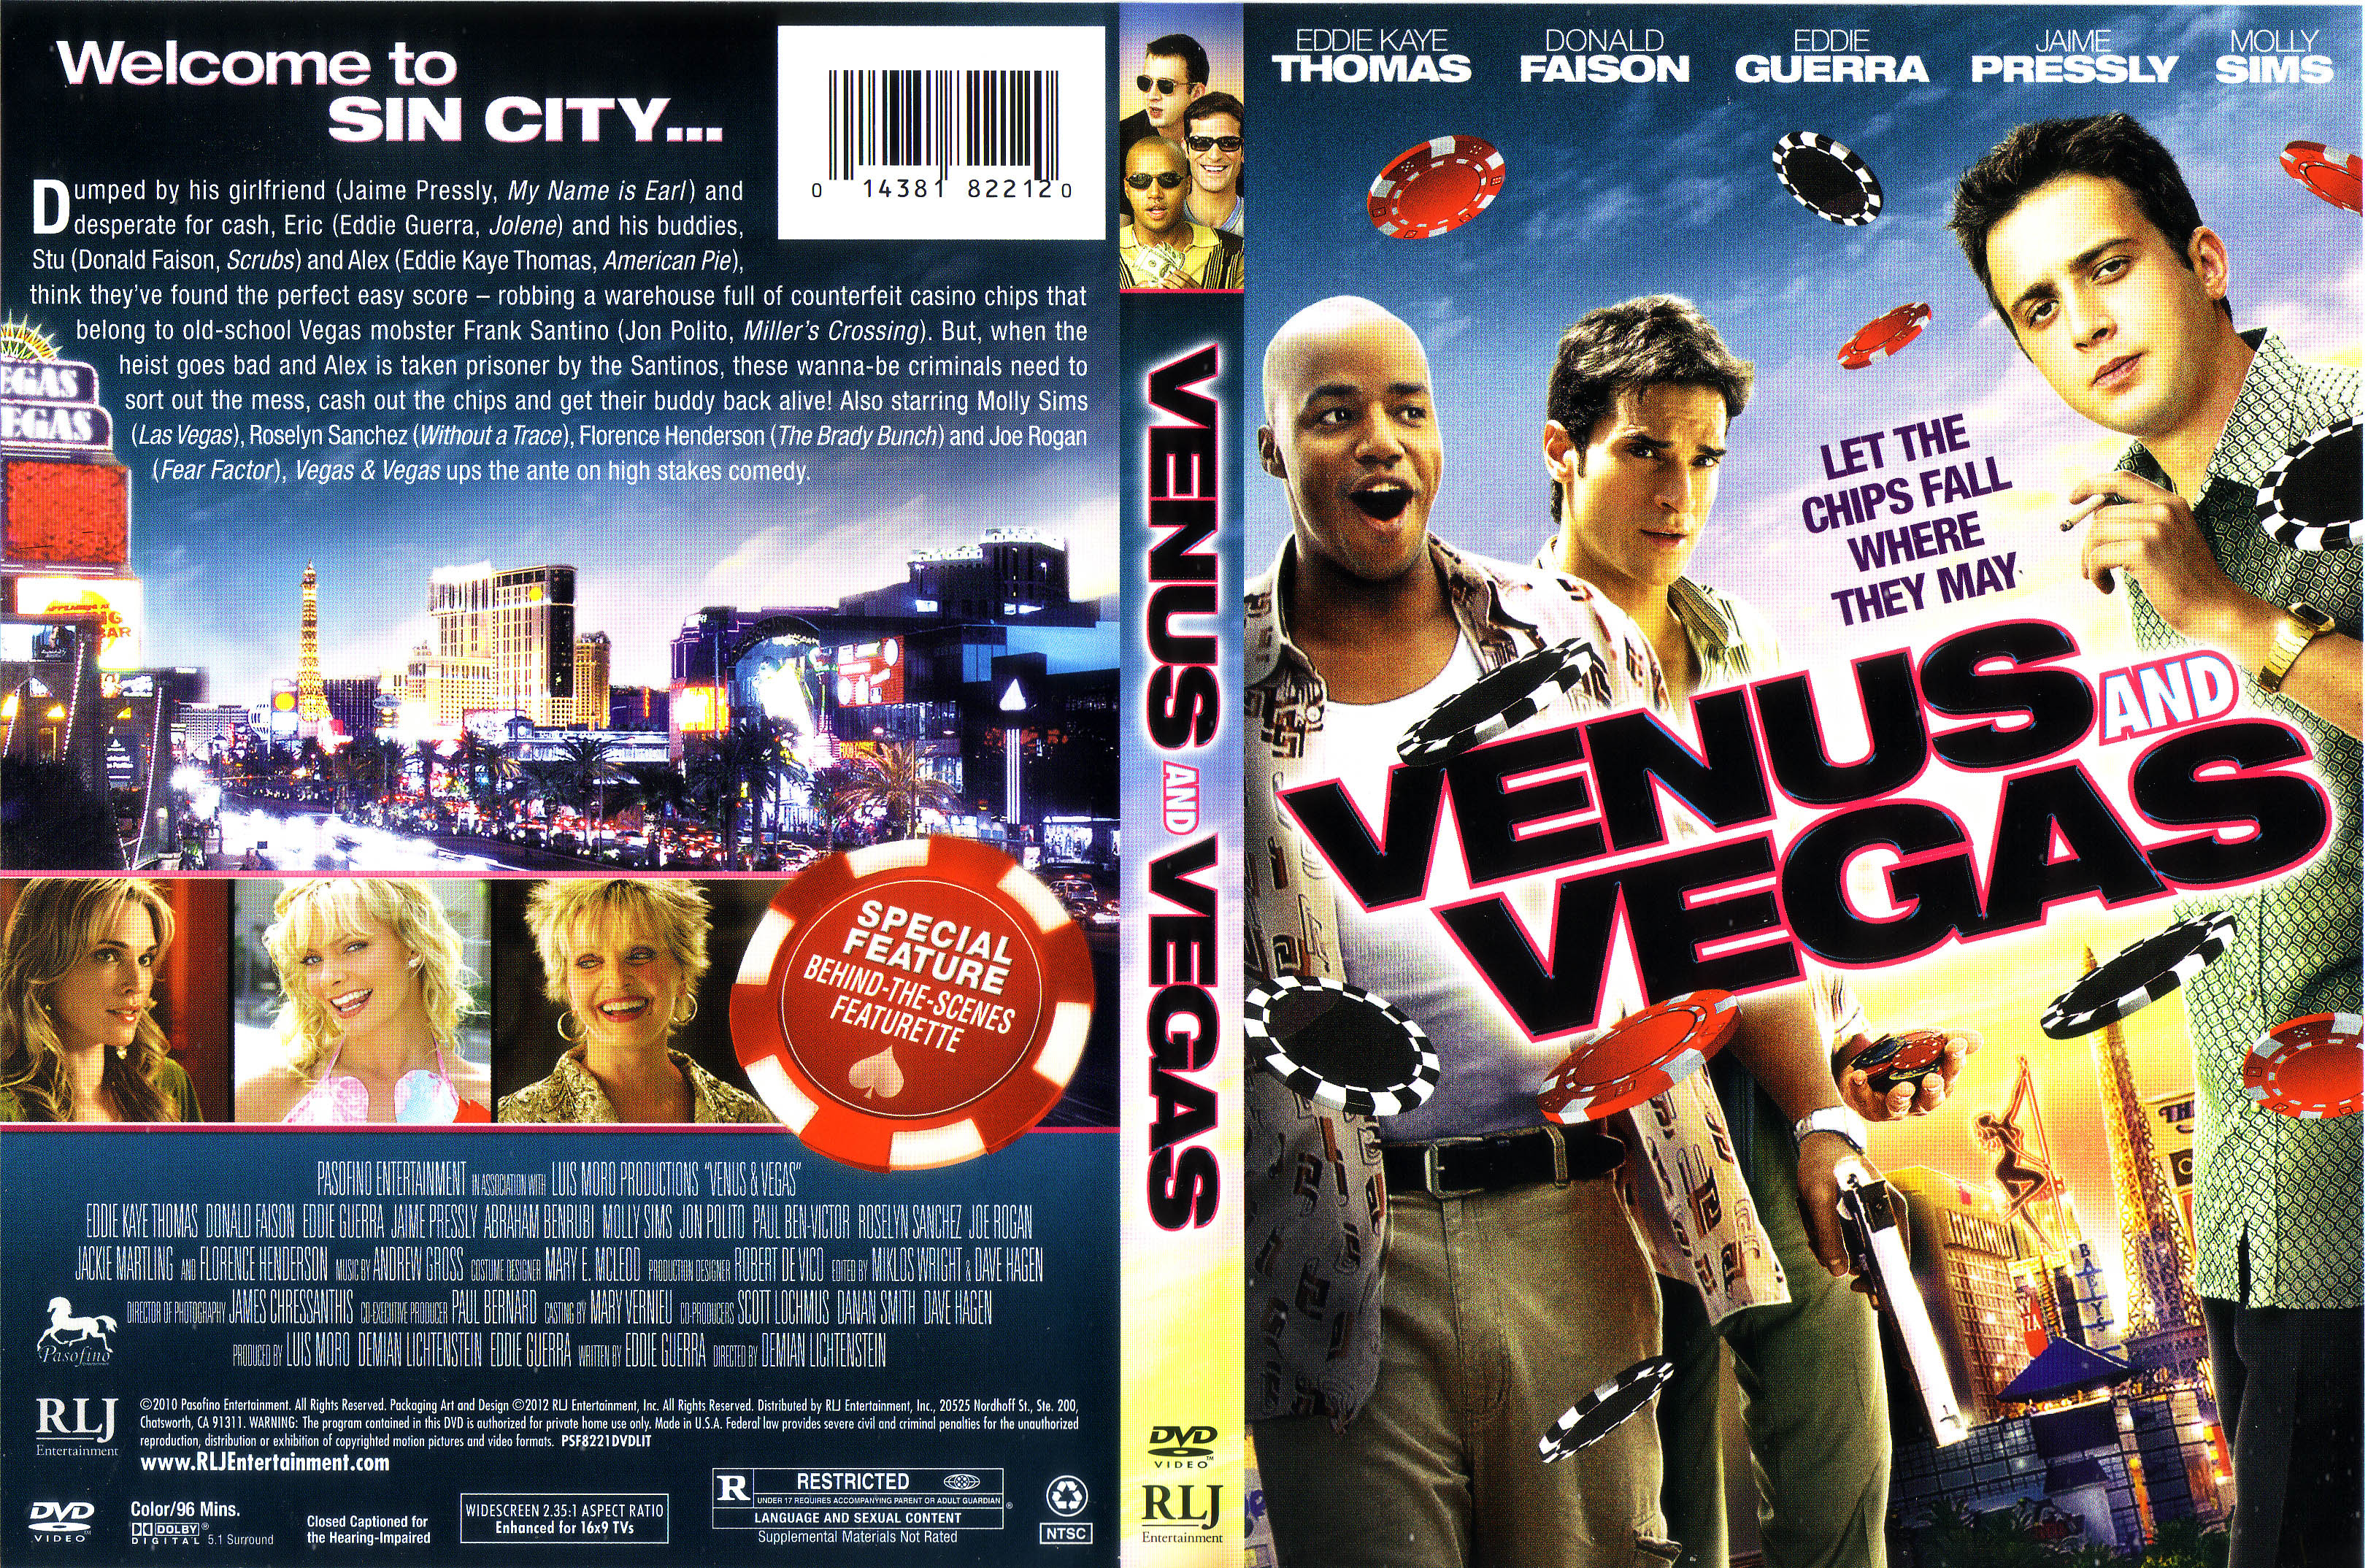 Jaquette DVD Venus & Vegas Zone 1